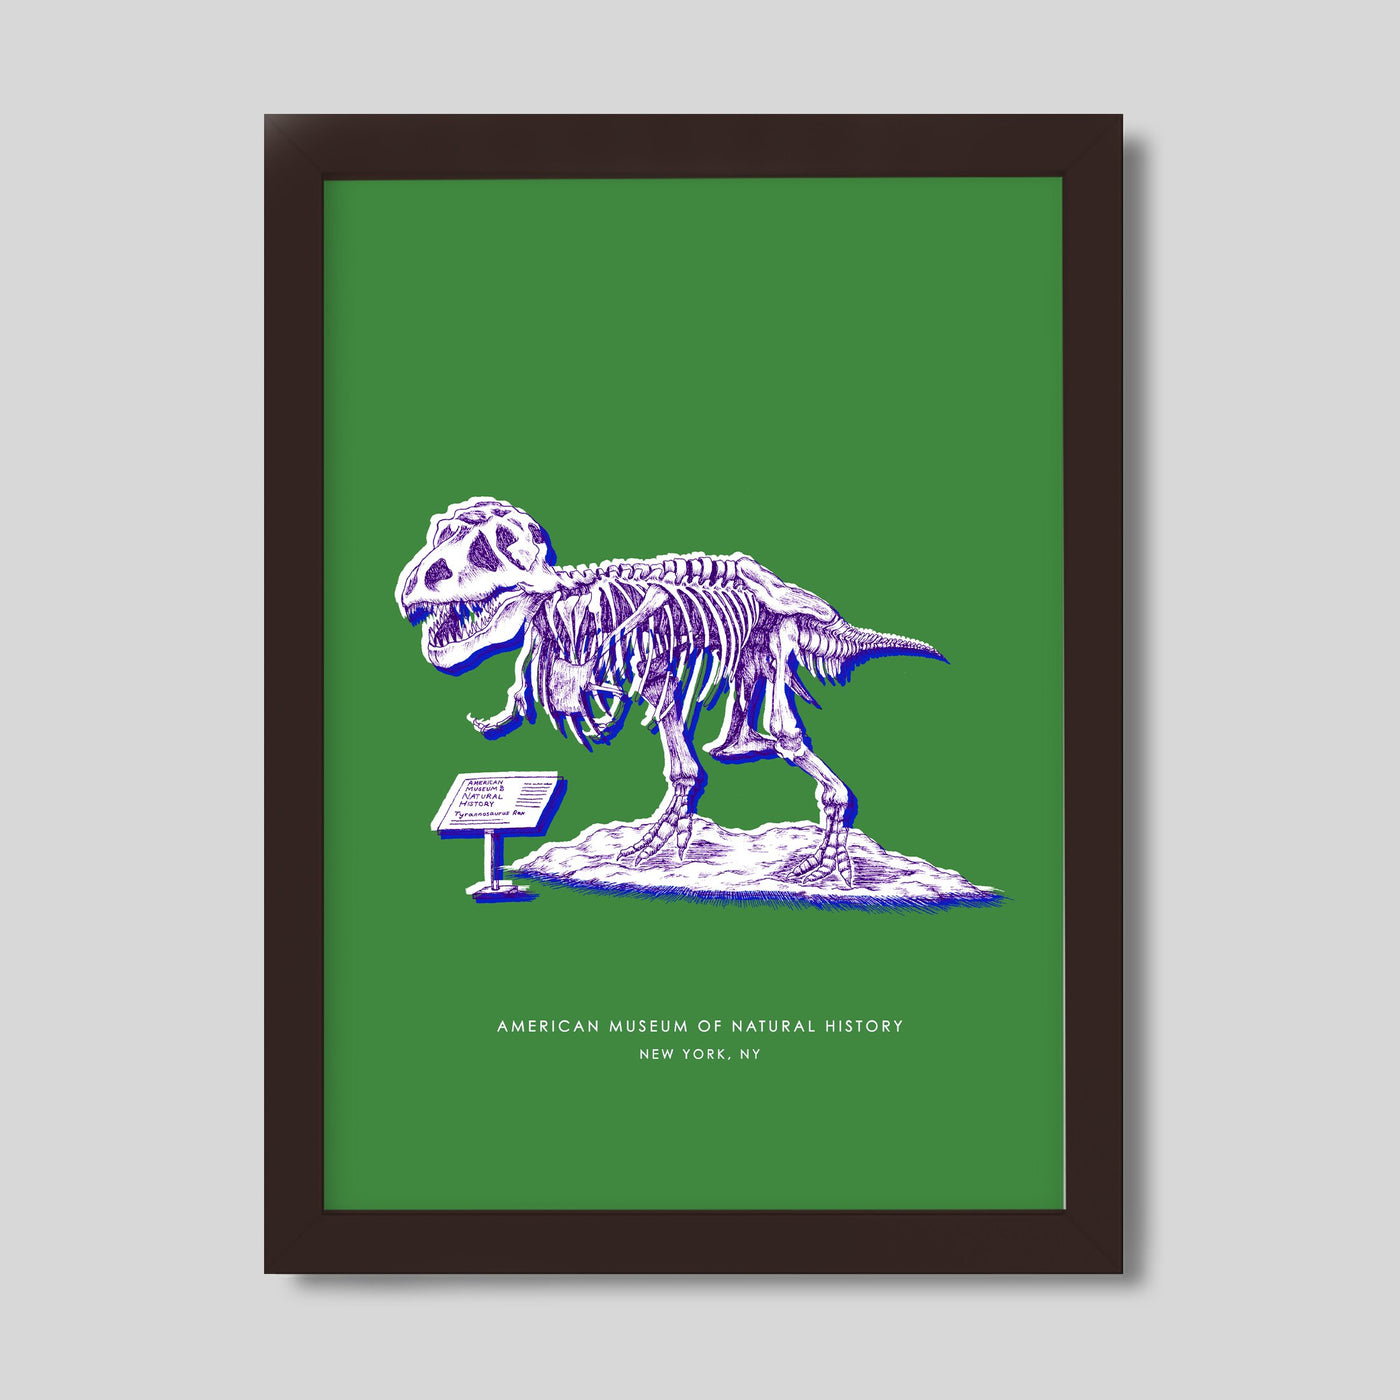 Gallery Prints Green Print / 8x10 / Walnut Frame New York Dinosaur Print dombezalergii